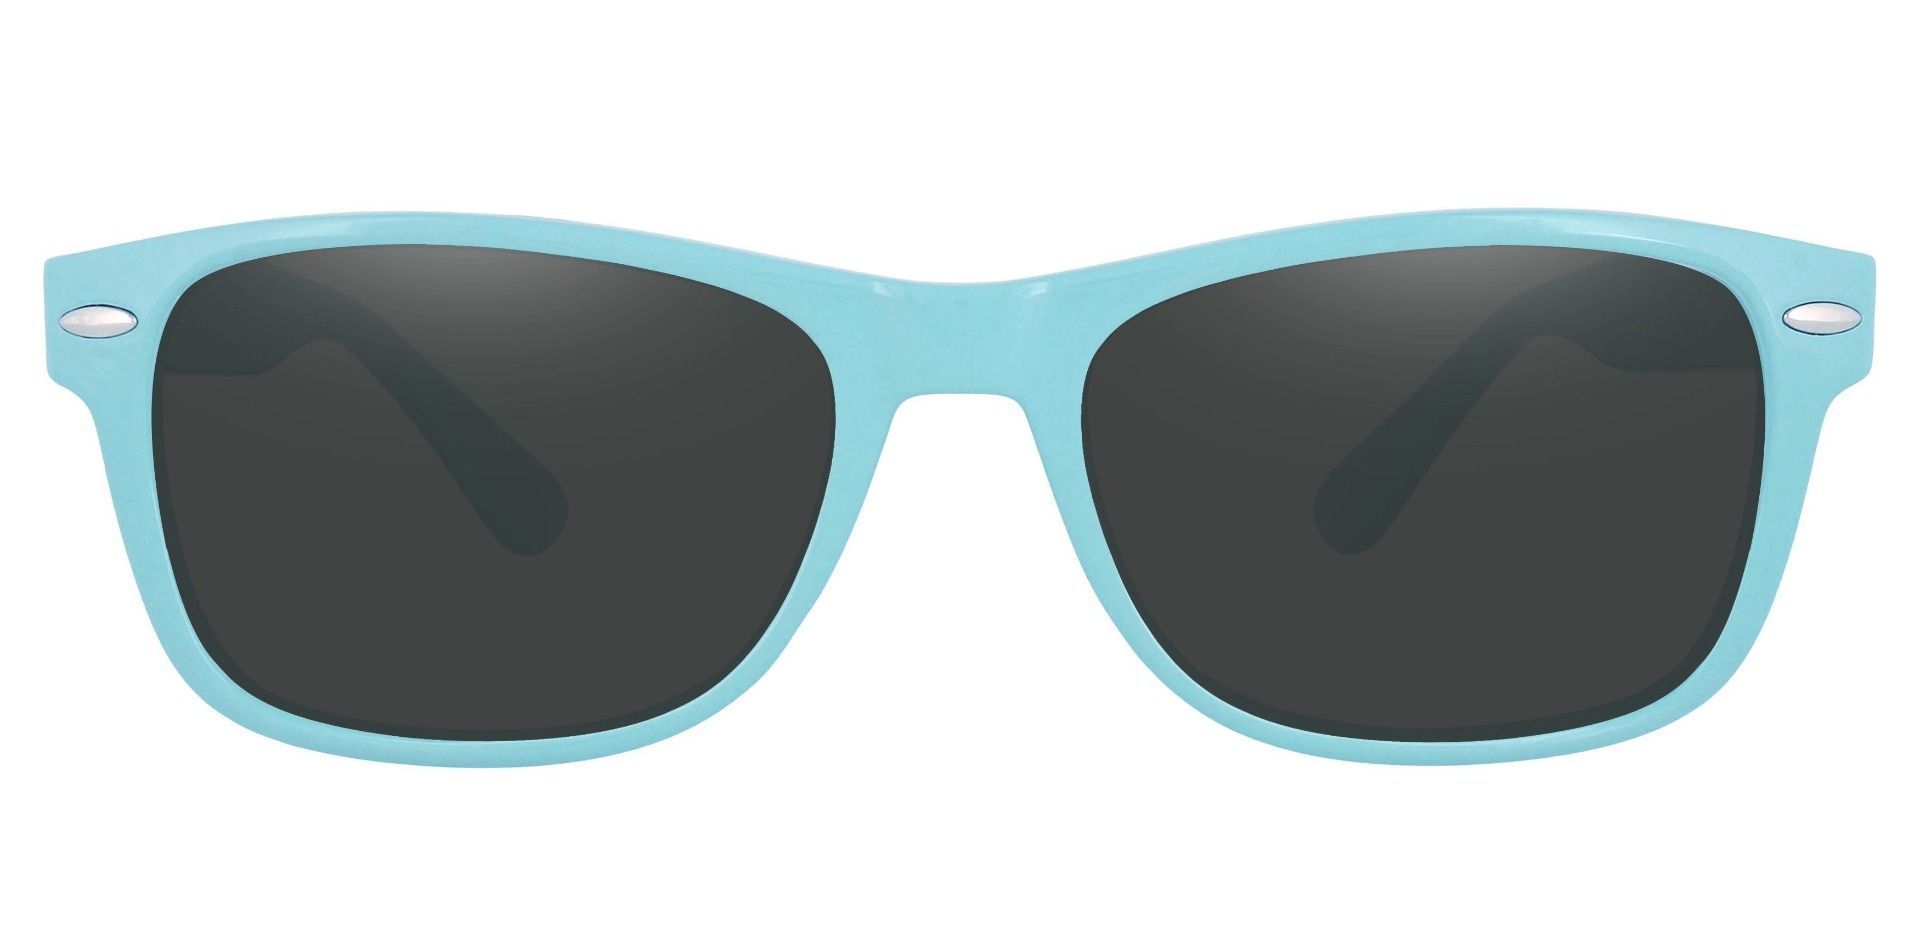 Kent Rectangle Prescription Sunglasses - Blue Frame With Gray Lenses